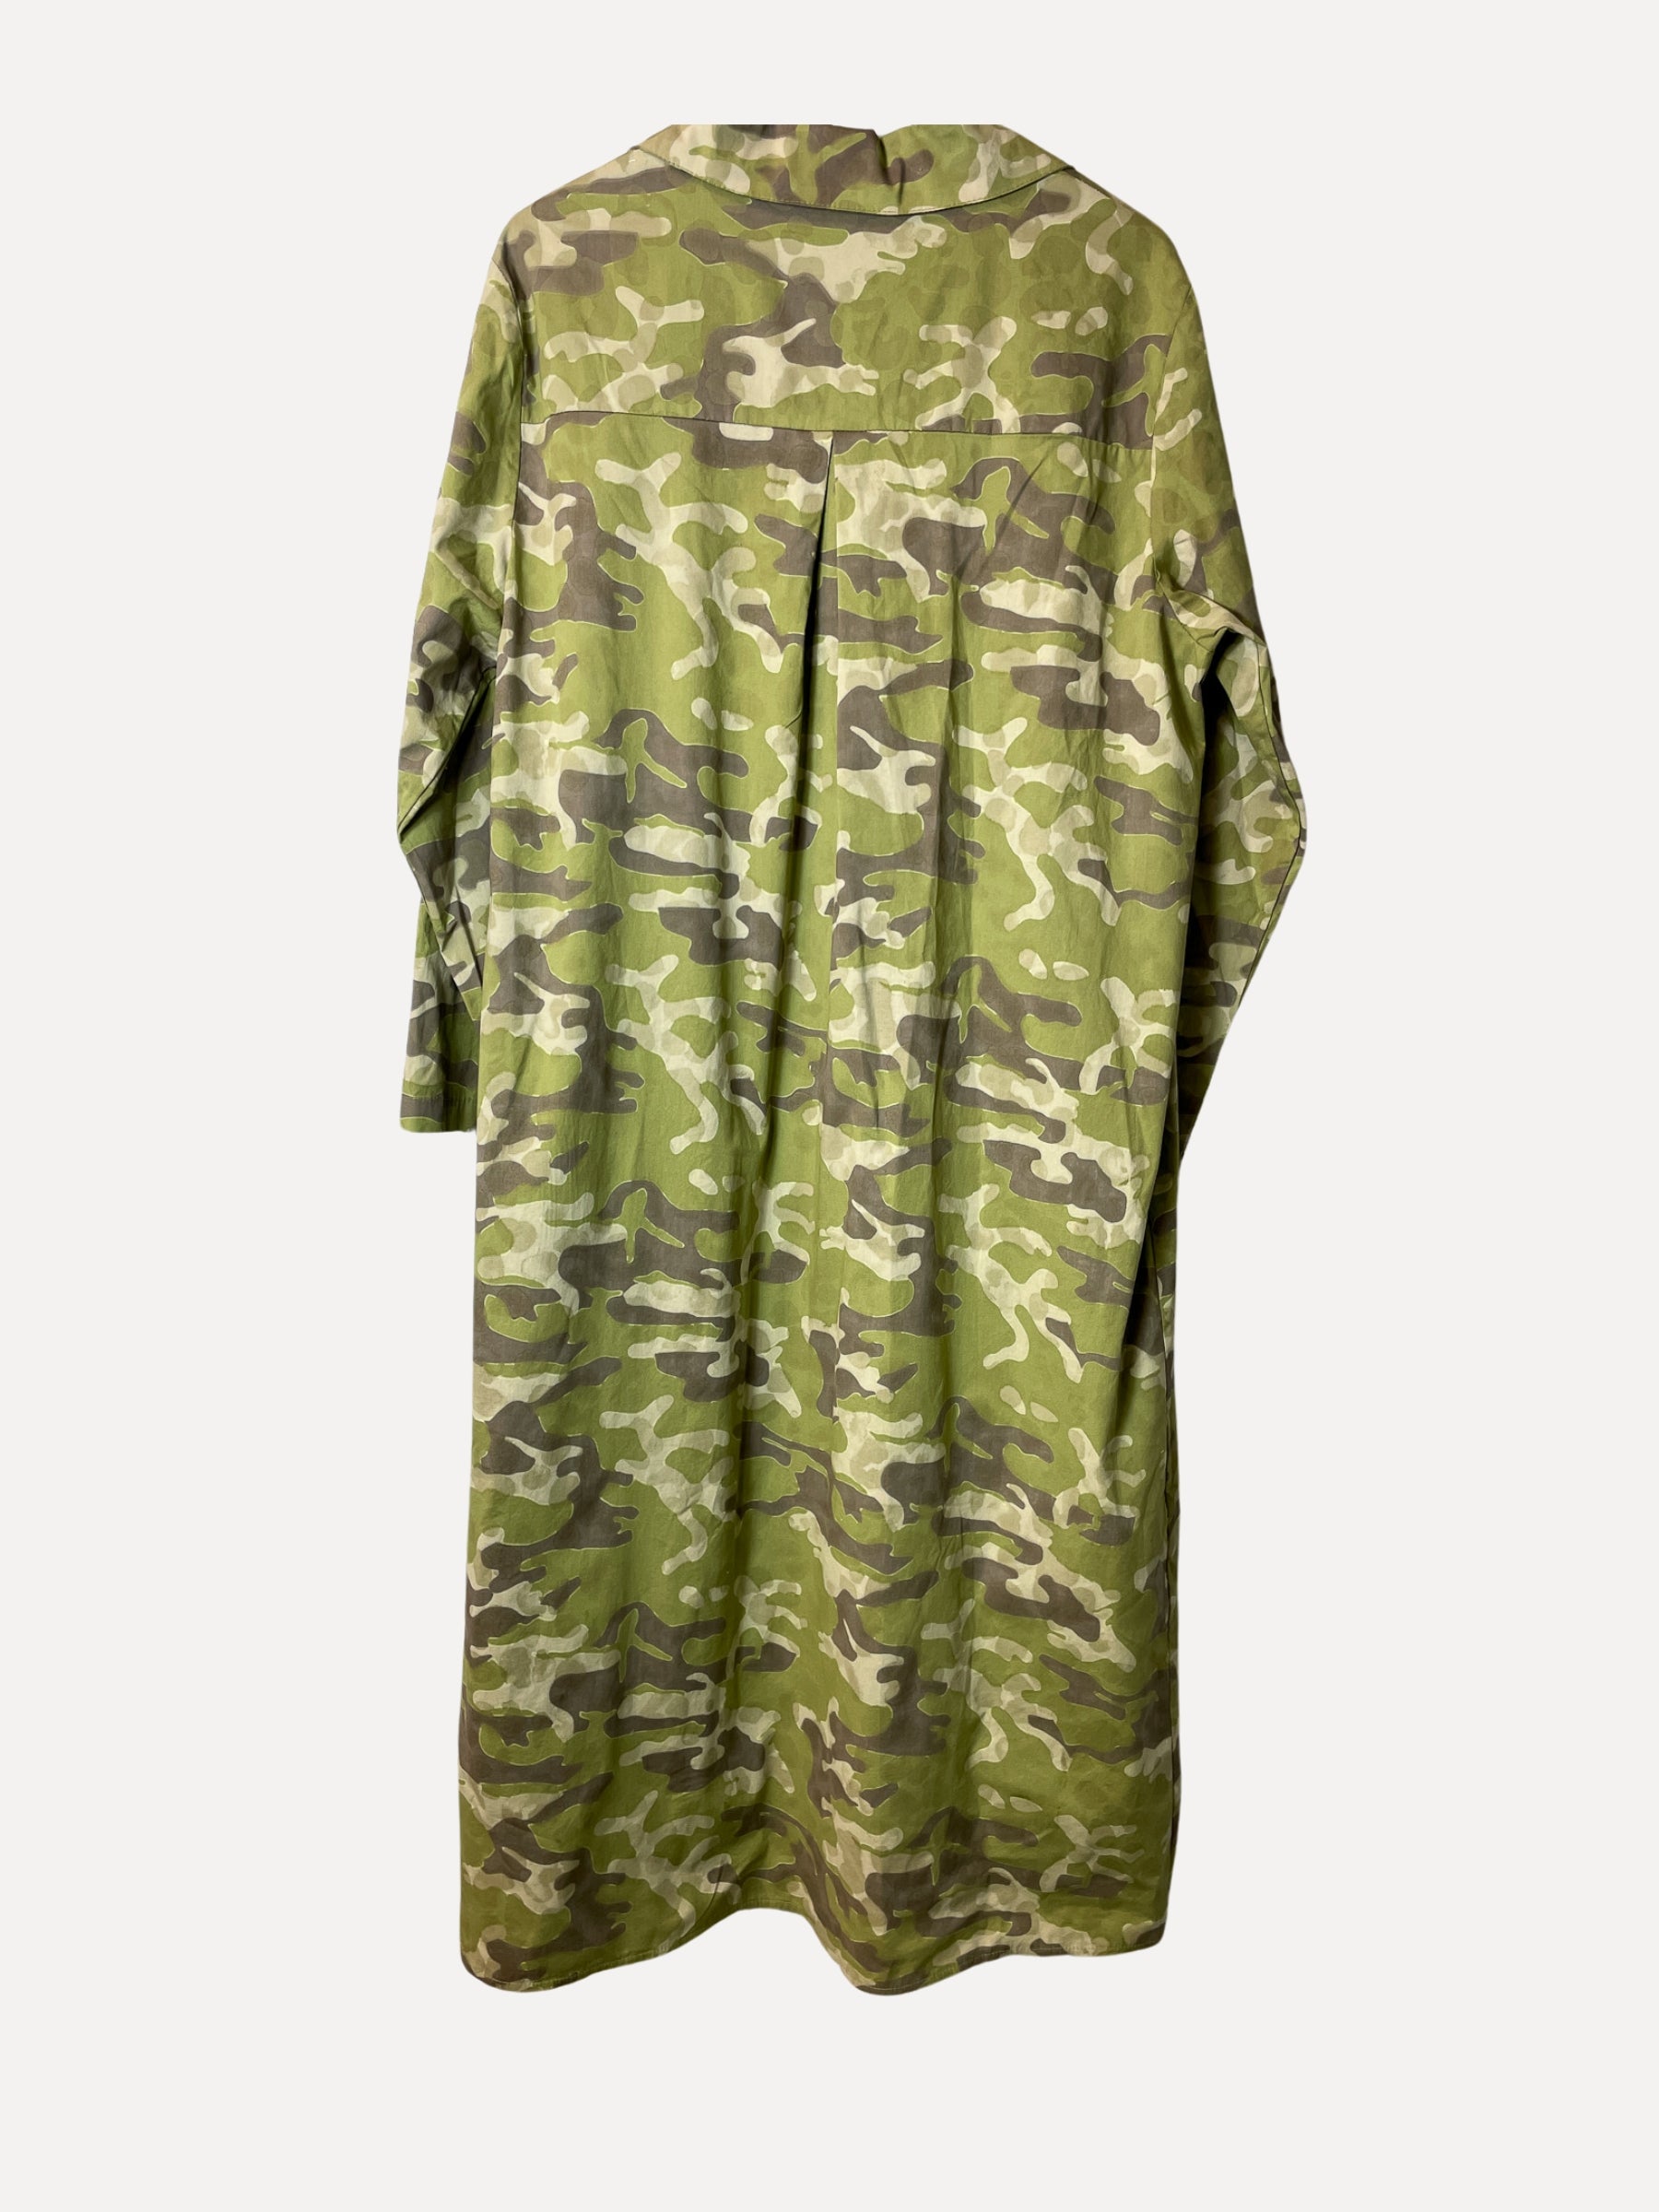 MARA CAMO Dress, Army